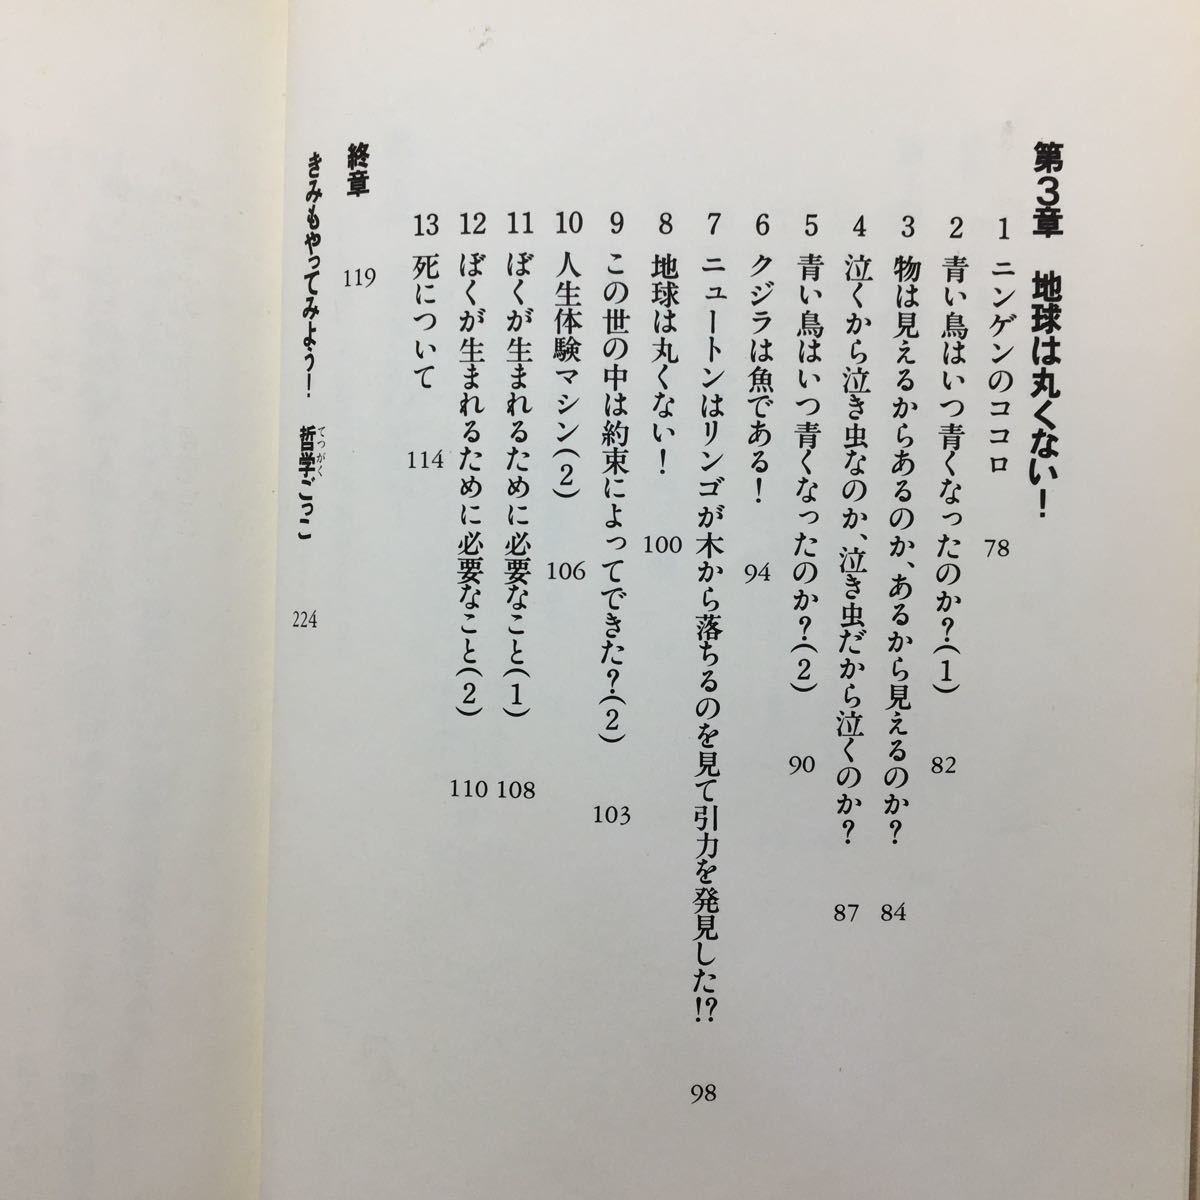 zaa-125♪子どものための哲学対話 (日本語) 単行本 1997/7/23 永井 均 (著), 内田 かずひろ (著)